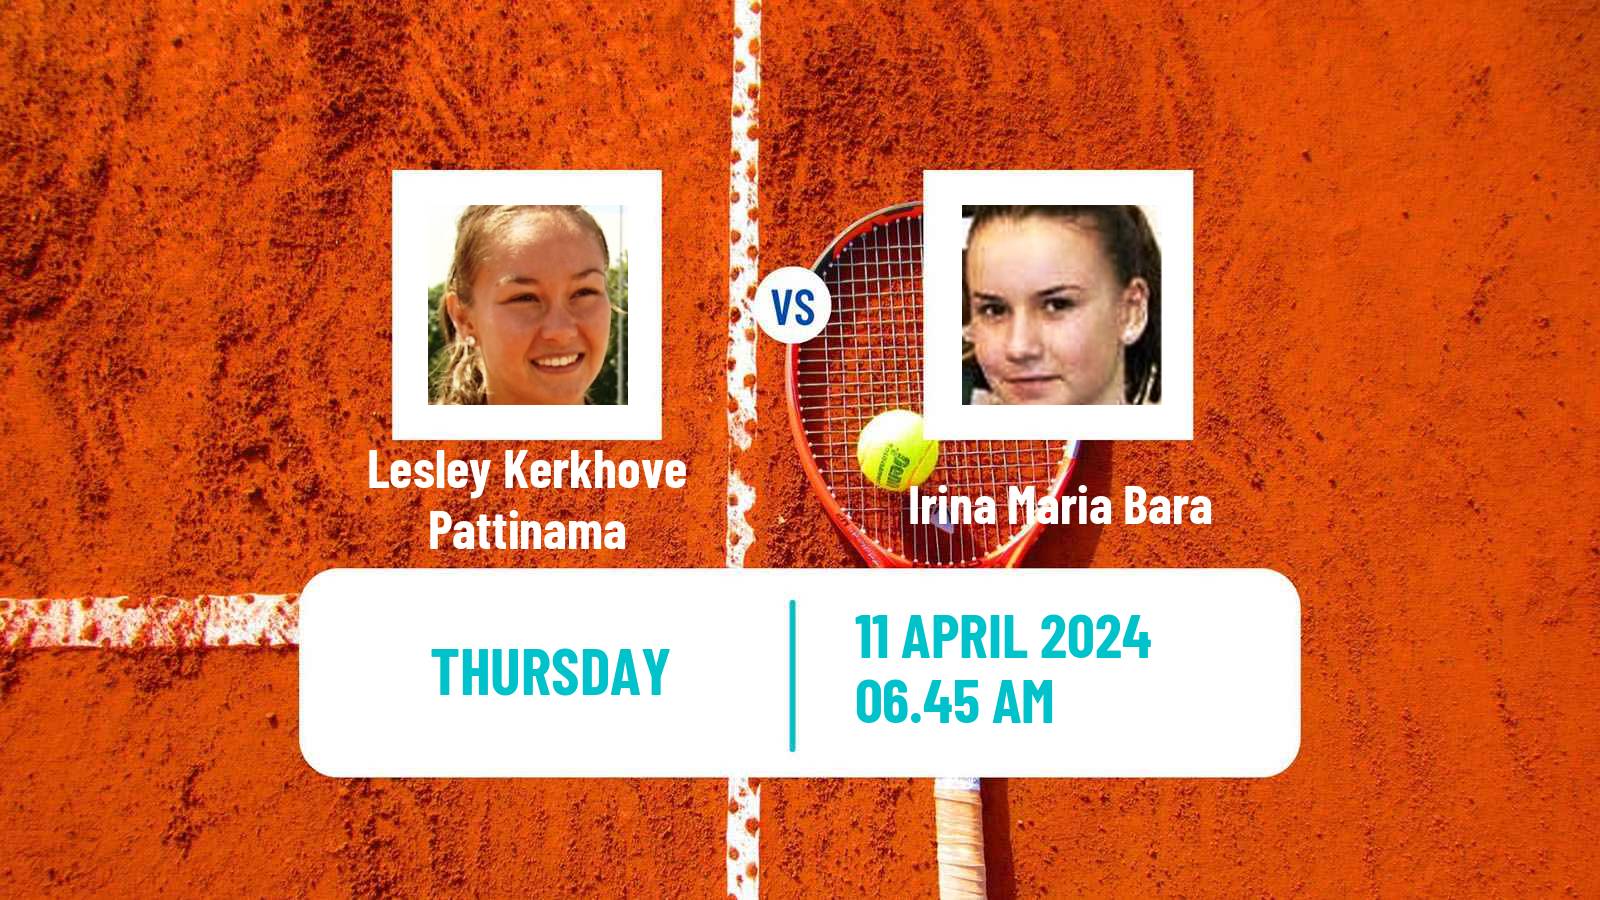 Tennis ITF W75 Bellinzona Women Lesley Kerkhove Pattinama - Irina Maria Bara